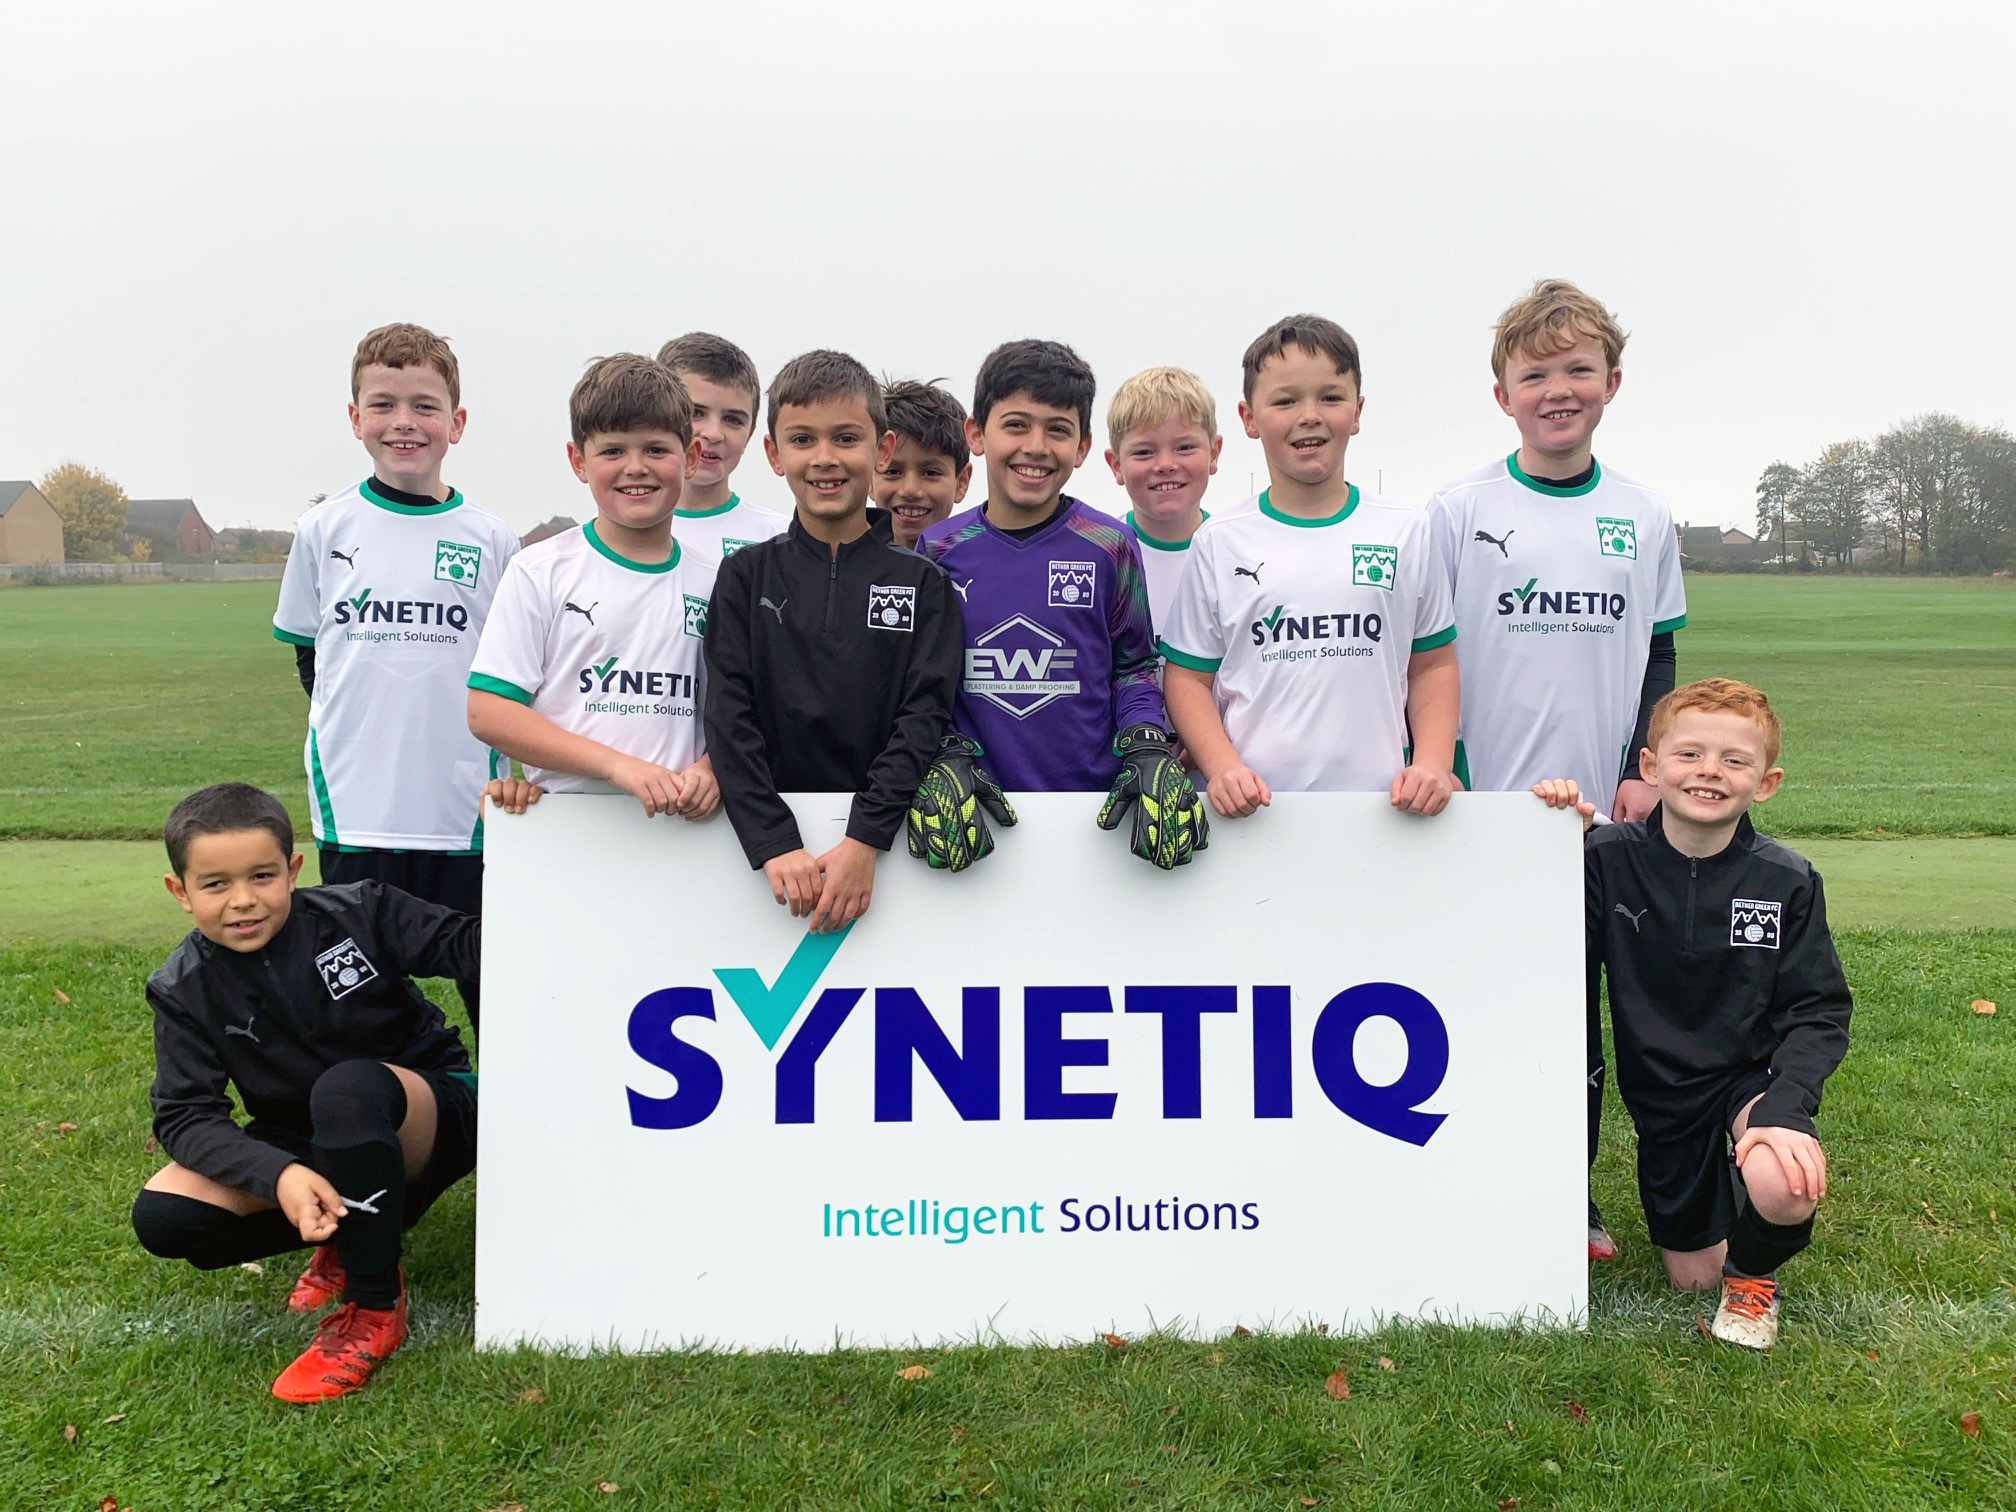 SYNETIQ sponsors Sheffield kids’ community football club